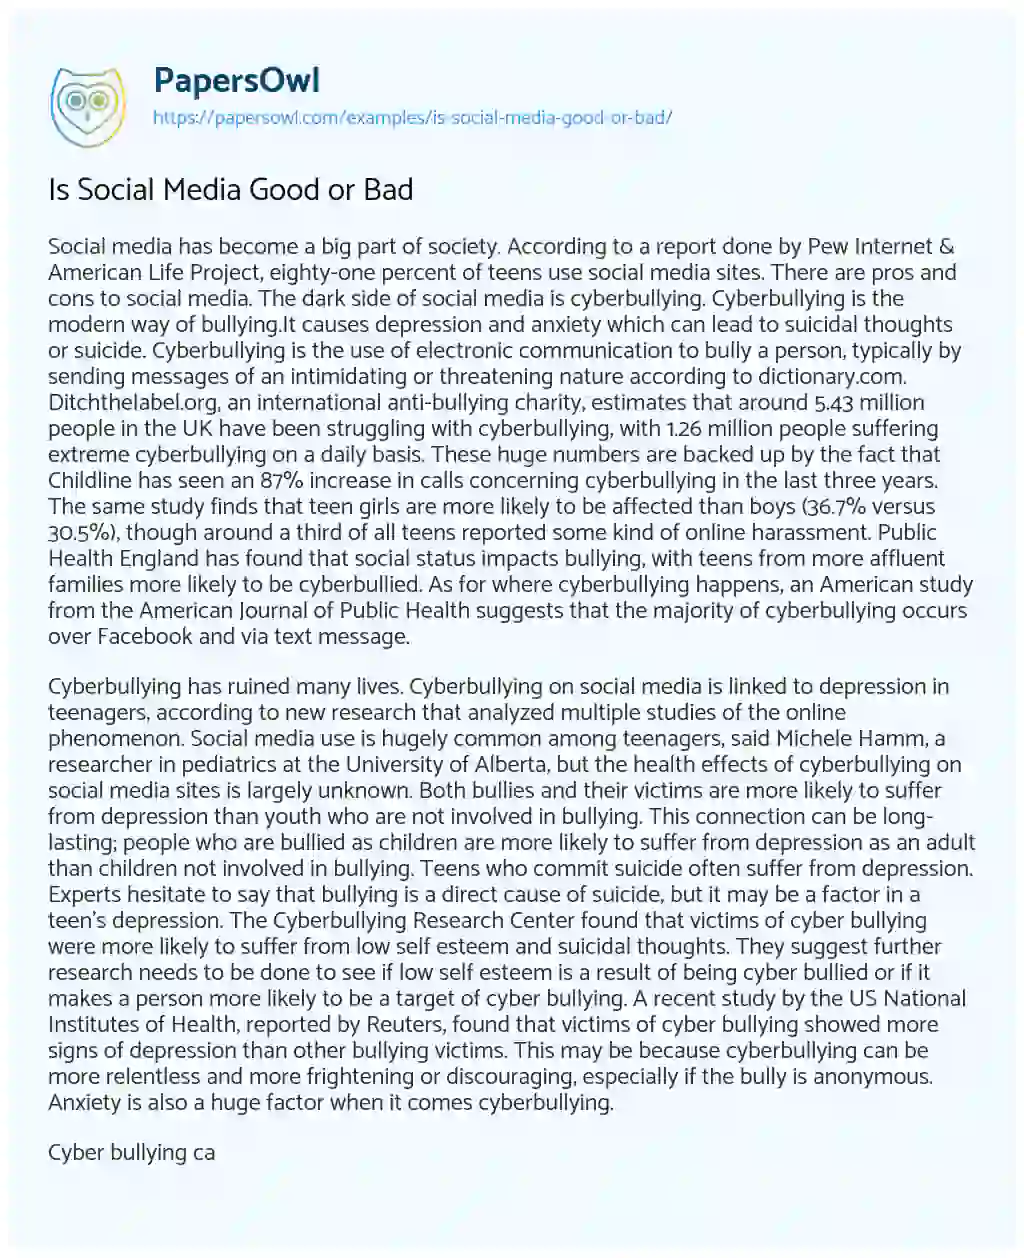 Essay on Is Social Media Good or Bad